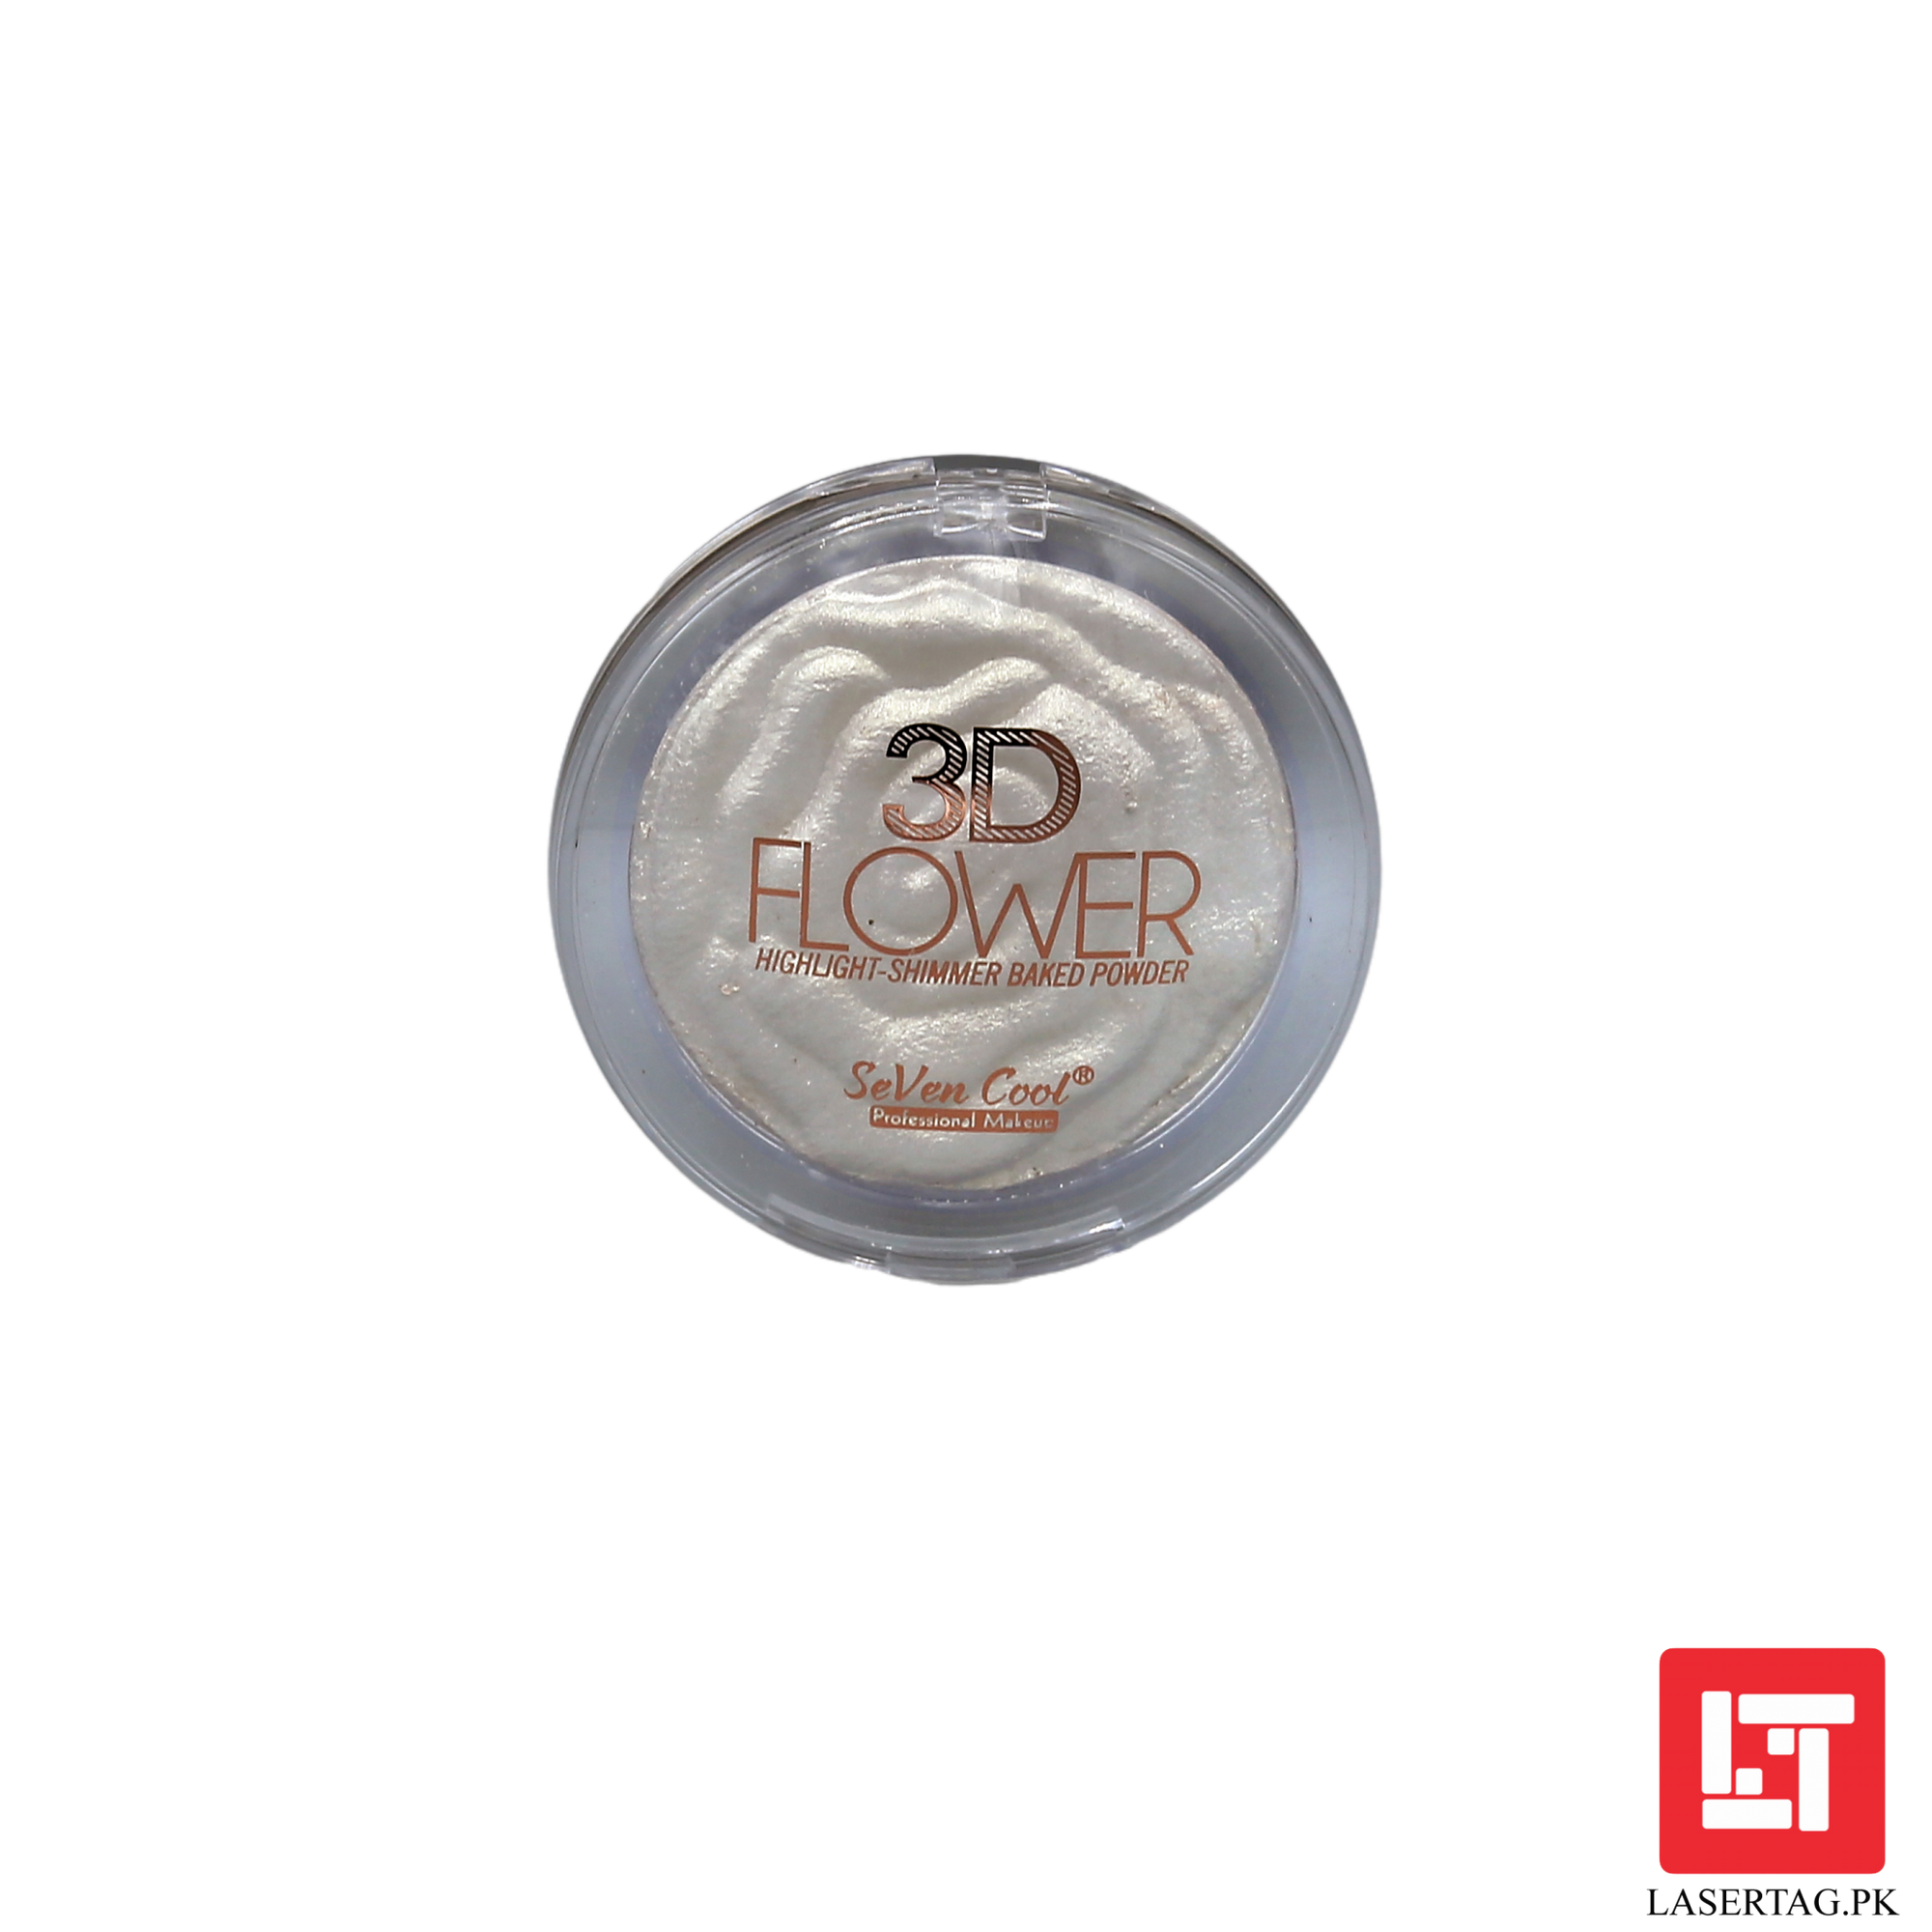 Seven Cool 3D Flower Highlighter Shimmer Baked Powder Shade#6 freeshipping - lasertag.pk